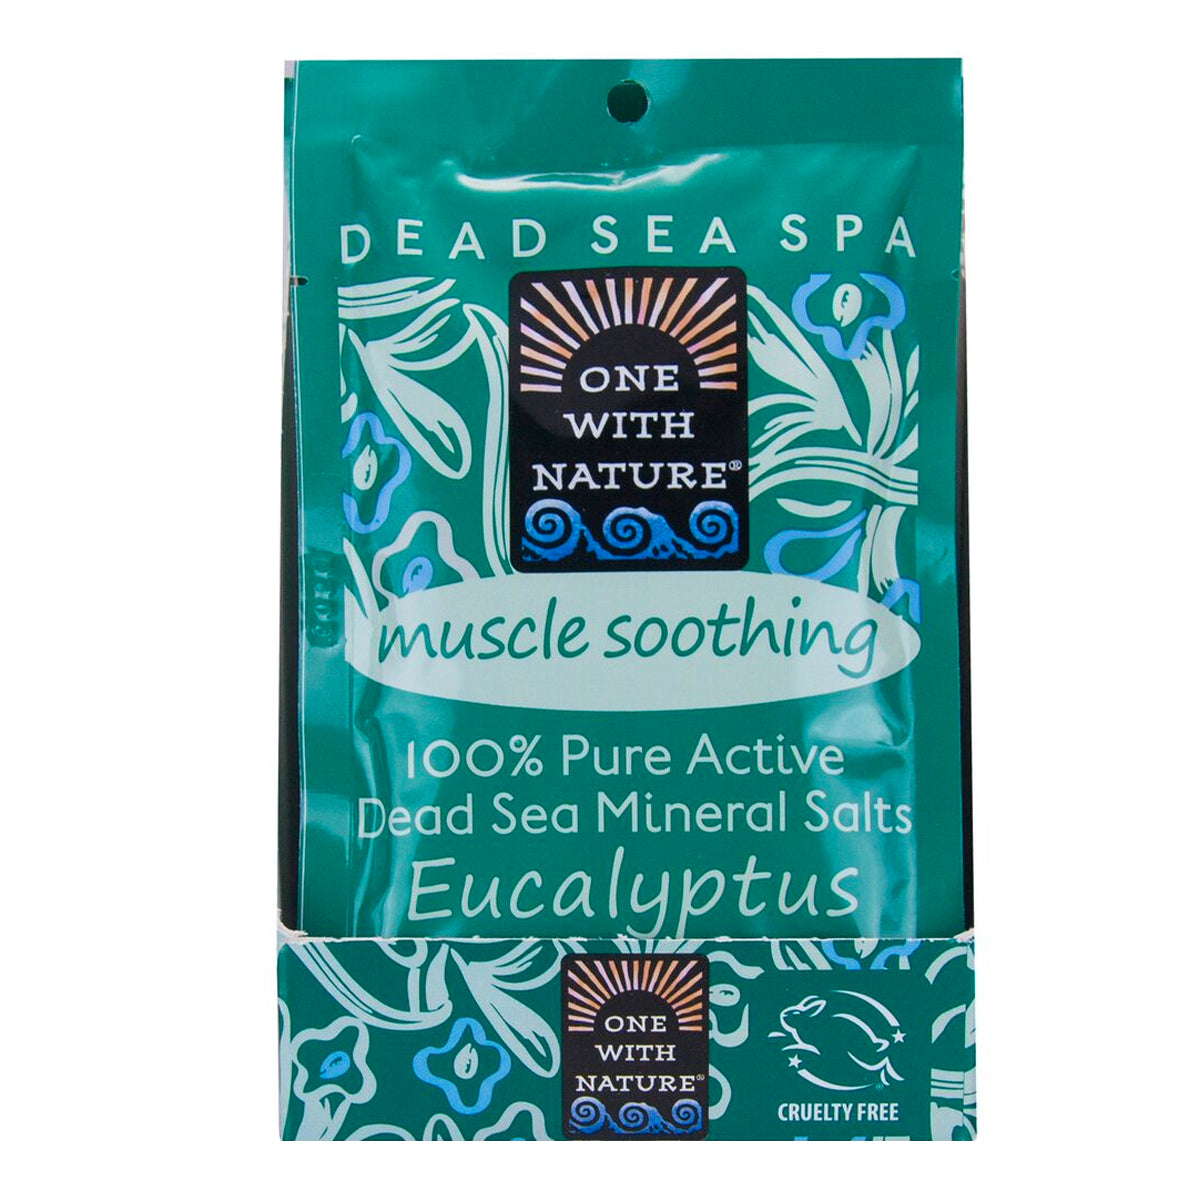 Primary image of Dead Sea Salts - Eucalyptus